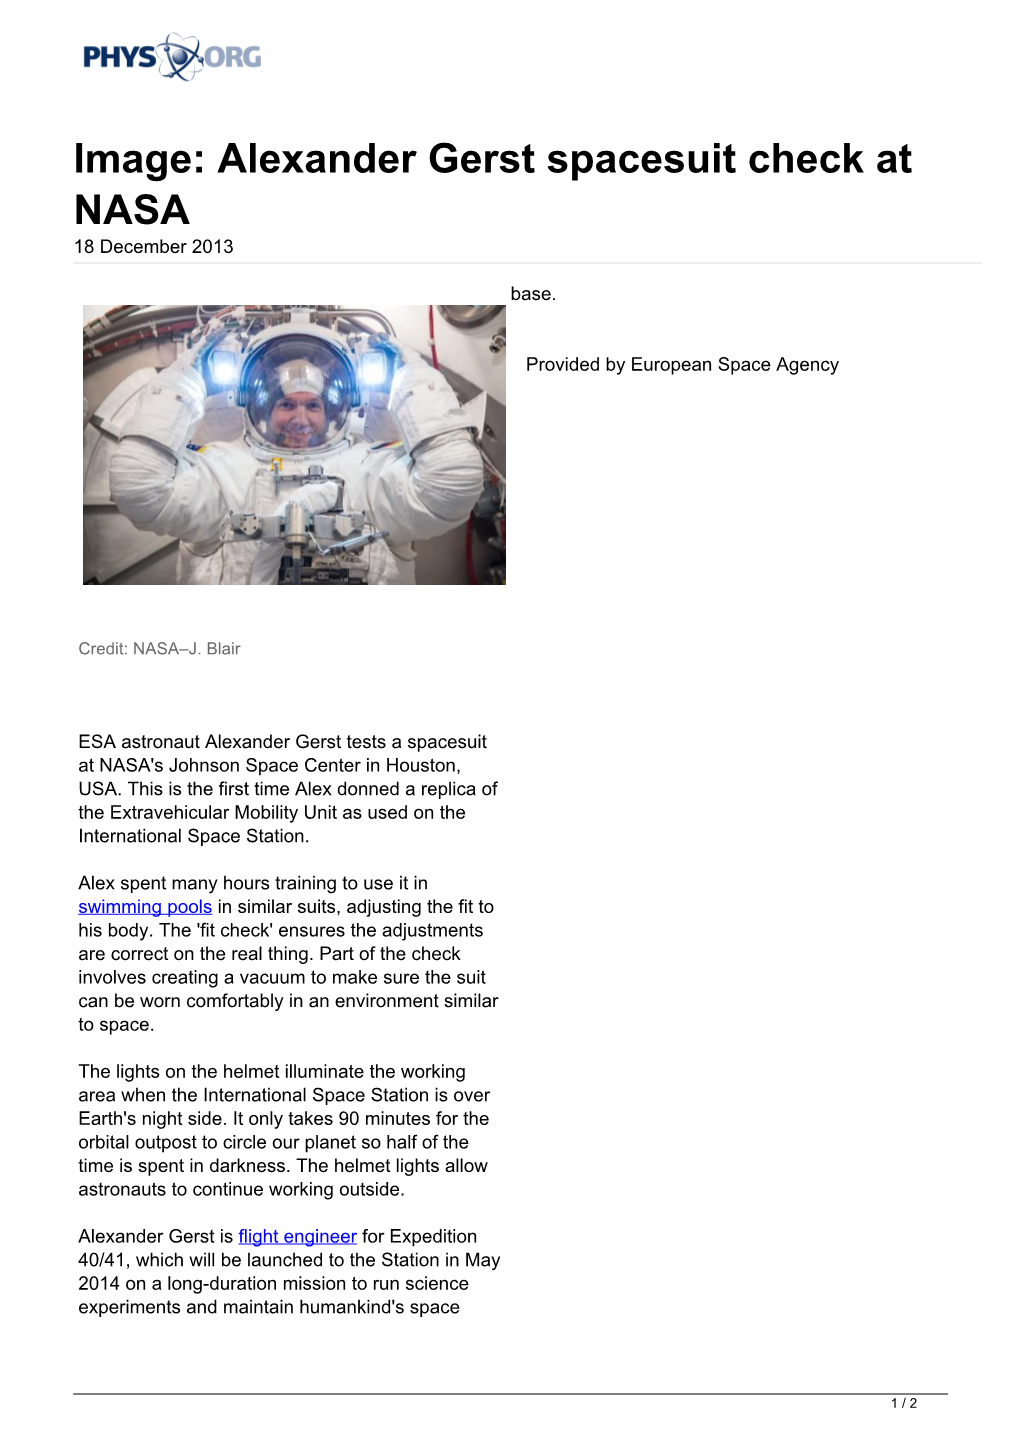 Alexander Gerst Spacesuit Check at NASA 18 December 2013